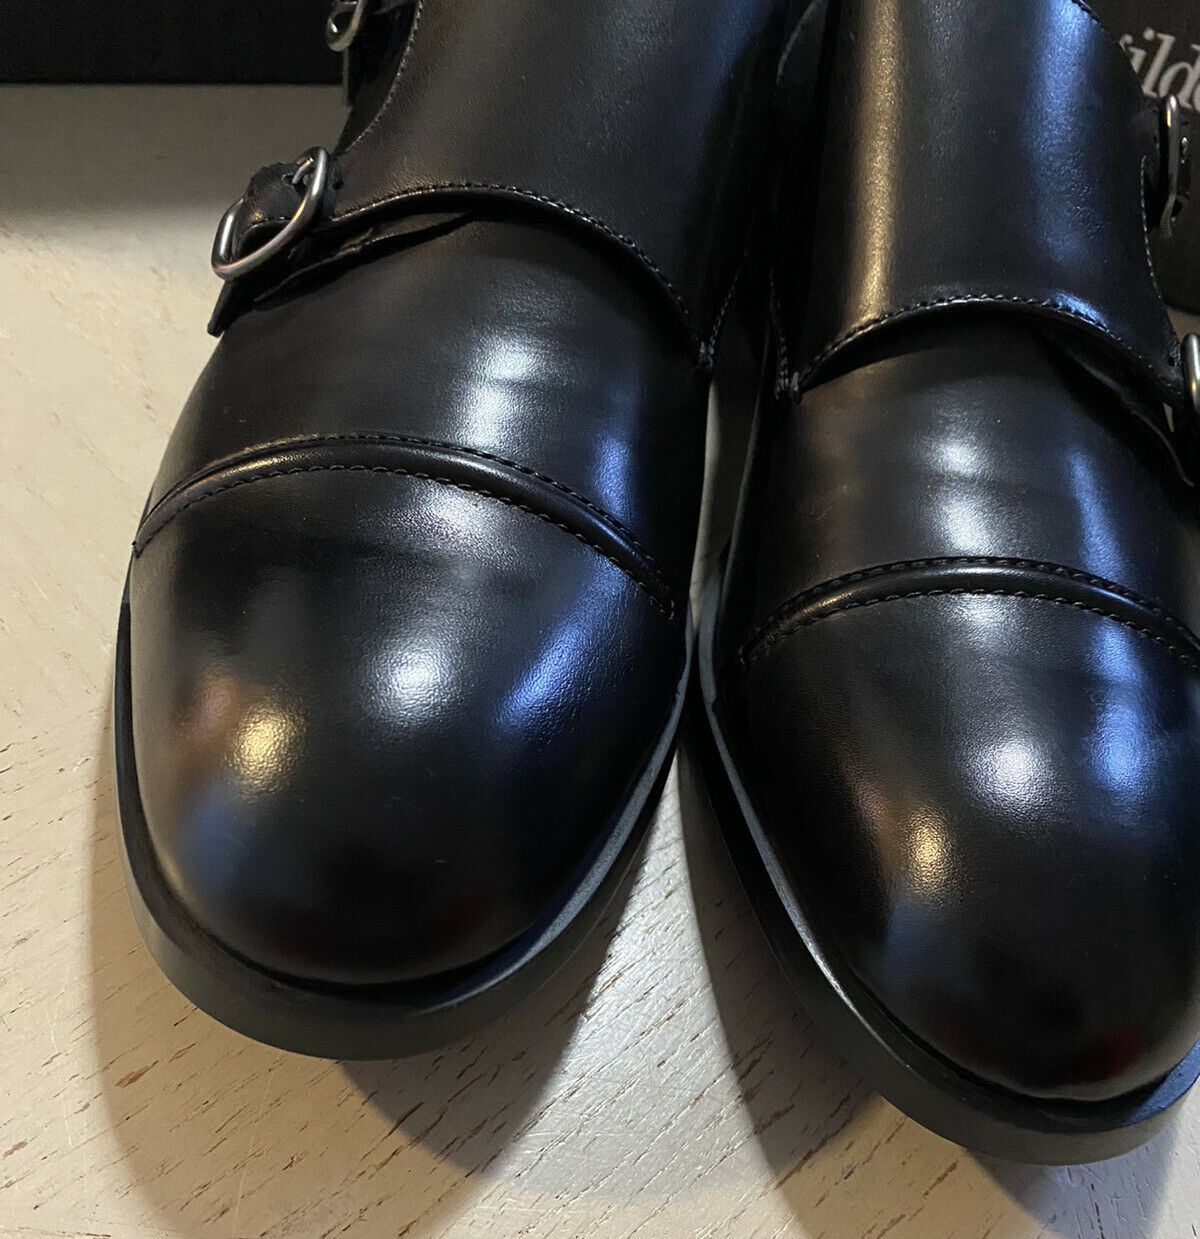 New $650 Ermenegildo Zegna Double Monk Leather Shoes Black 9 US Italy